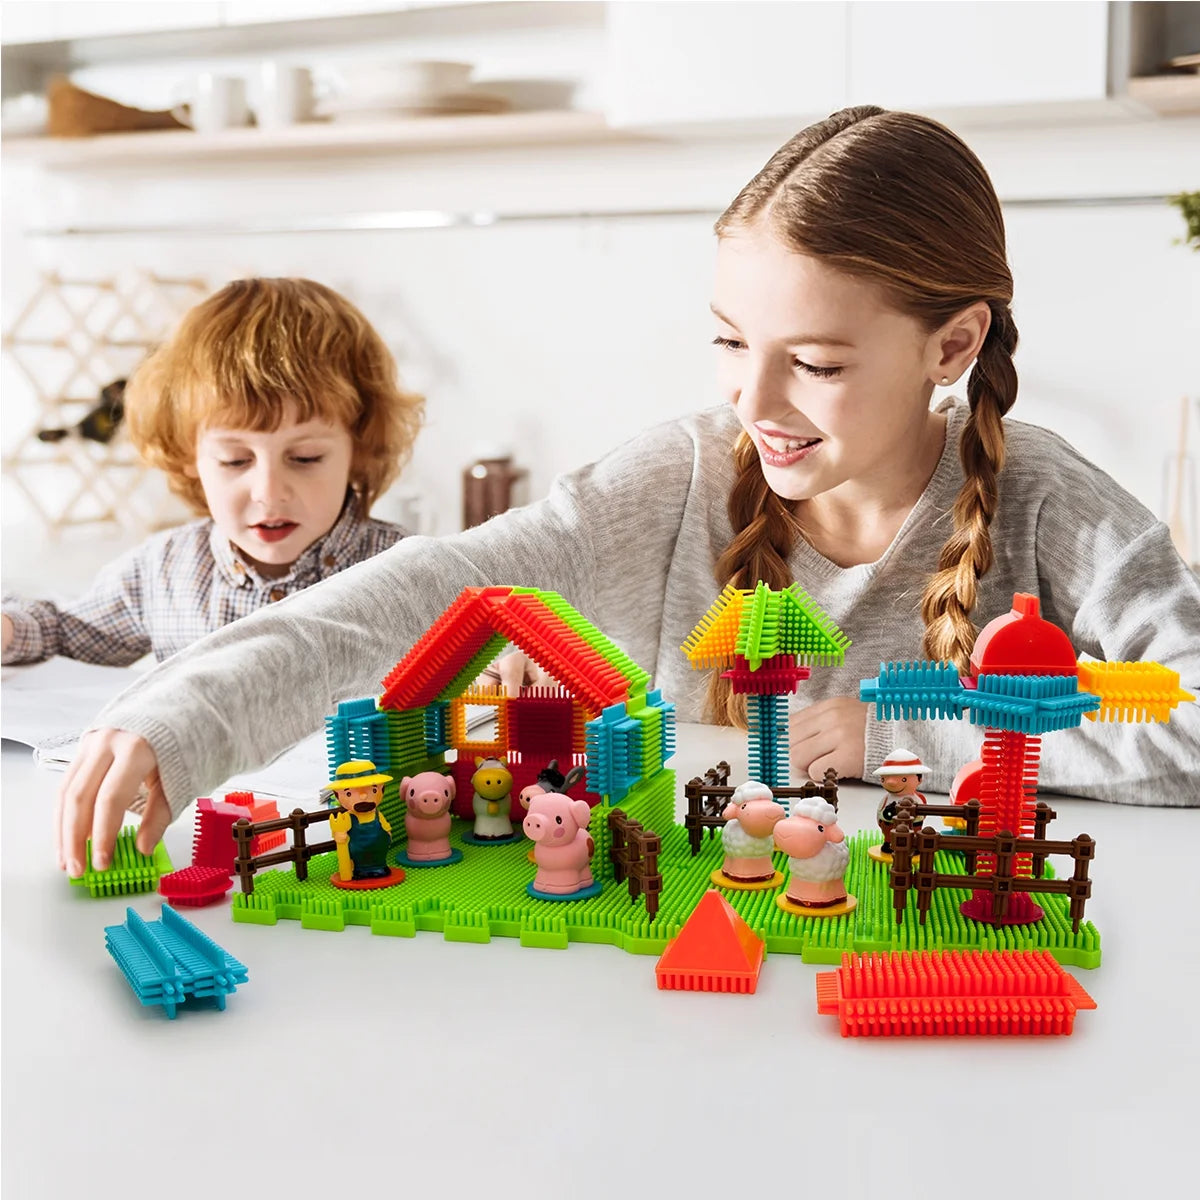 100 PC Farm Theme, Hedgehog Building Blocks, Building Toys, Soft Toys for Kids 3+